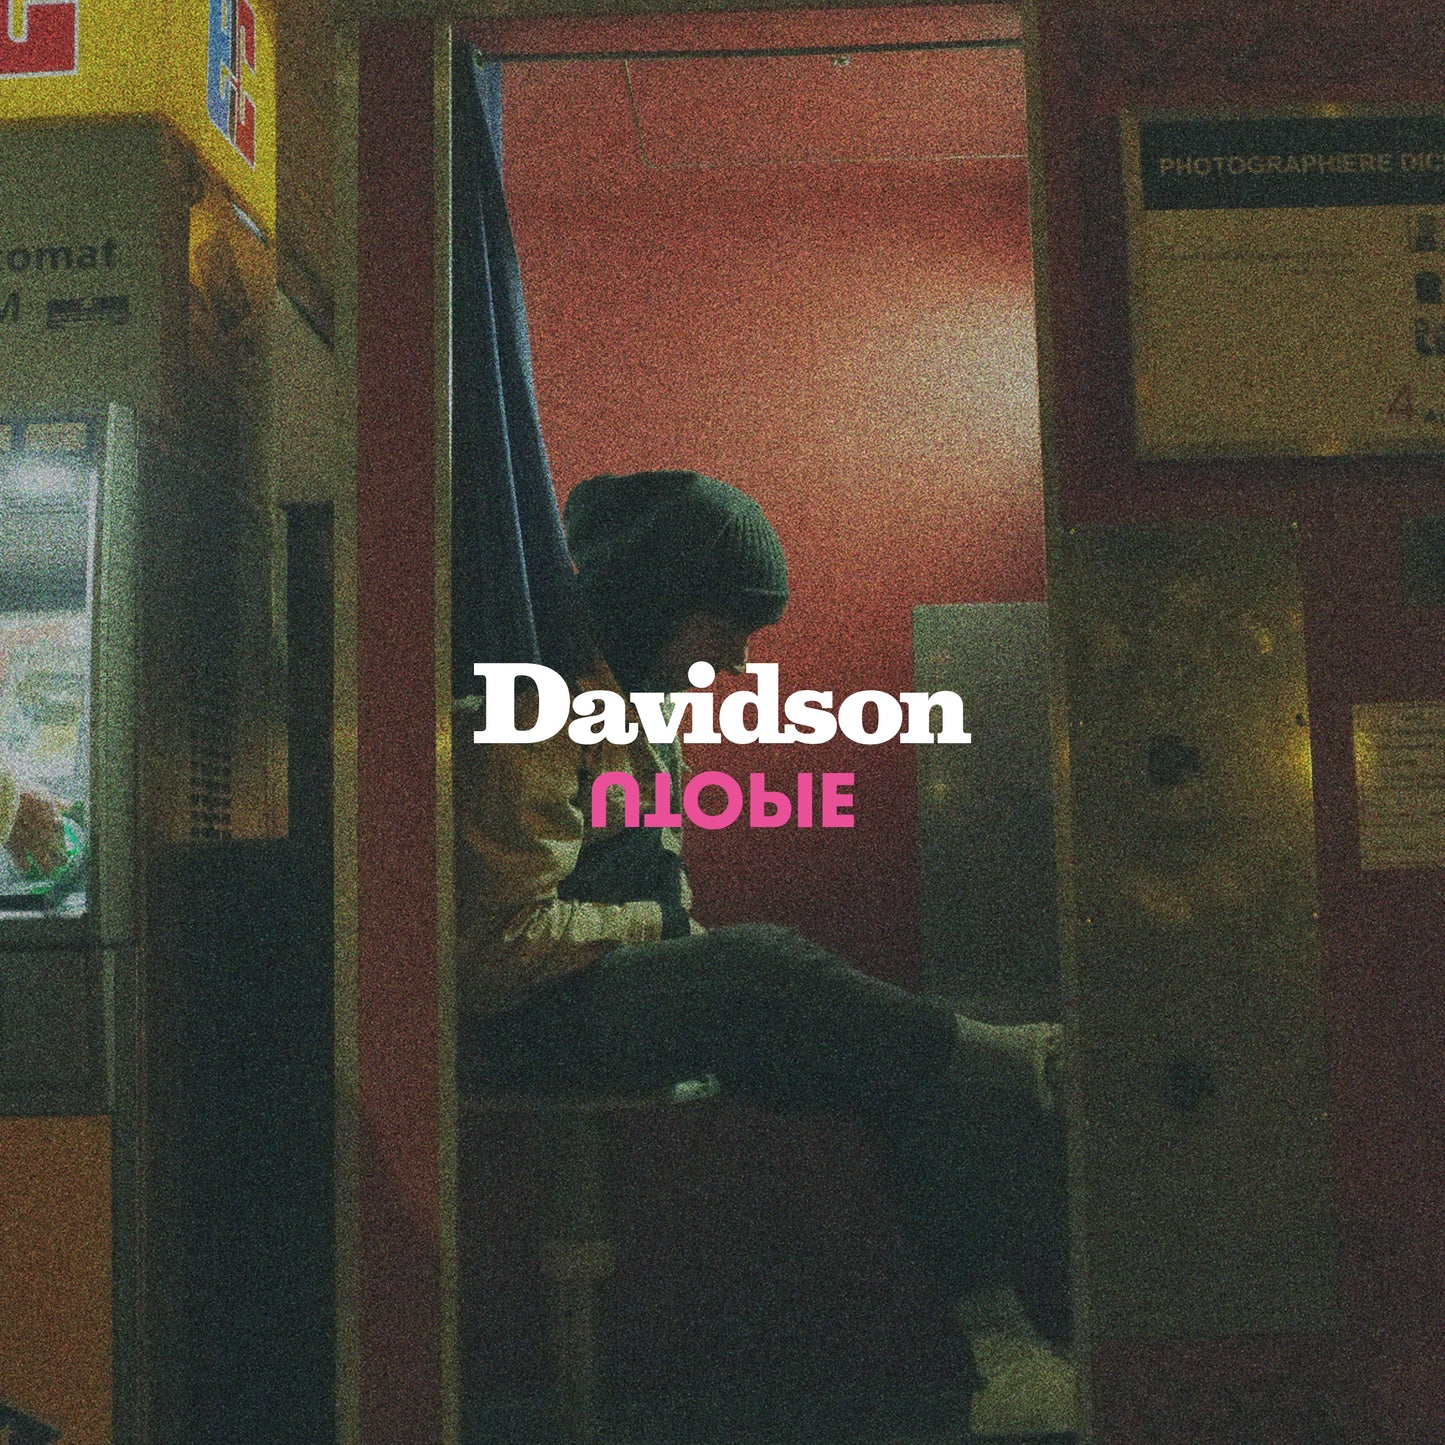 DAVIDSON - Utopie EP Vinyl